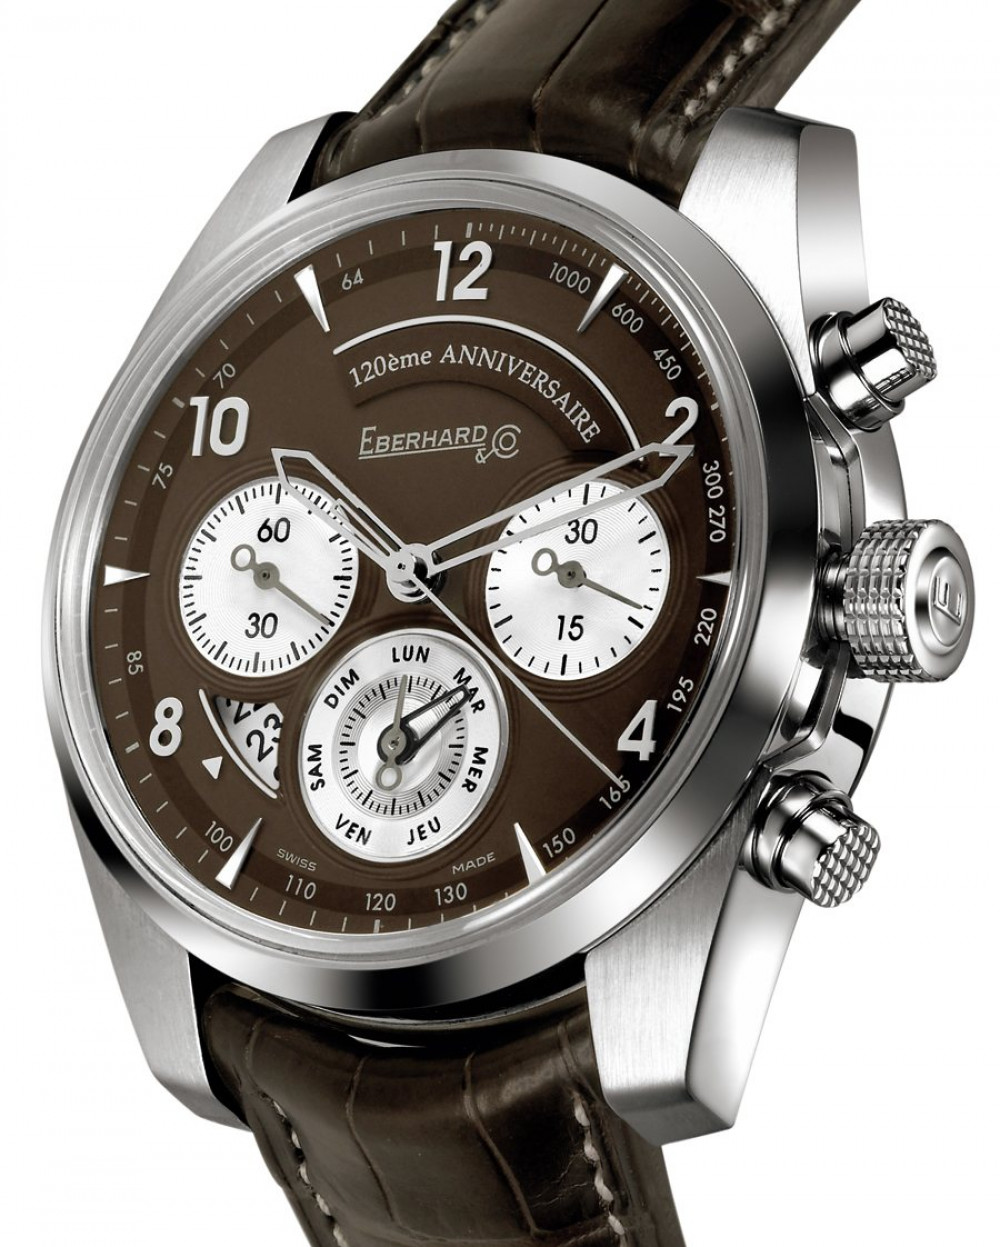 Zegarek firmy Eberhard & Co., model Chrono 120ème anniversaire